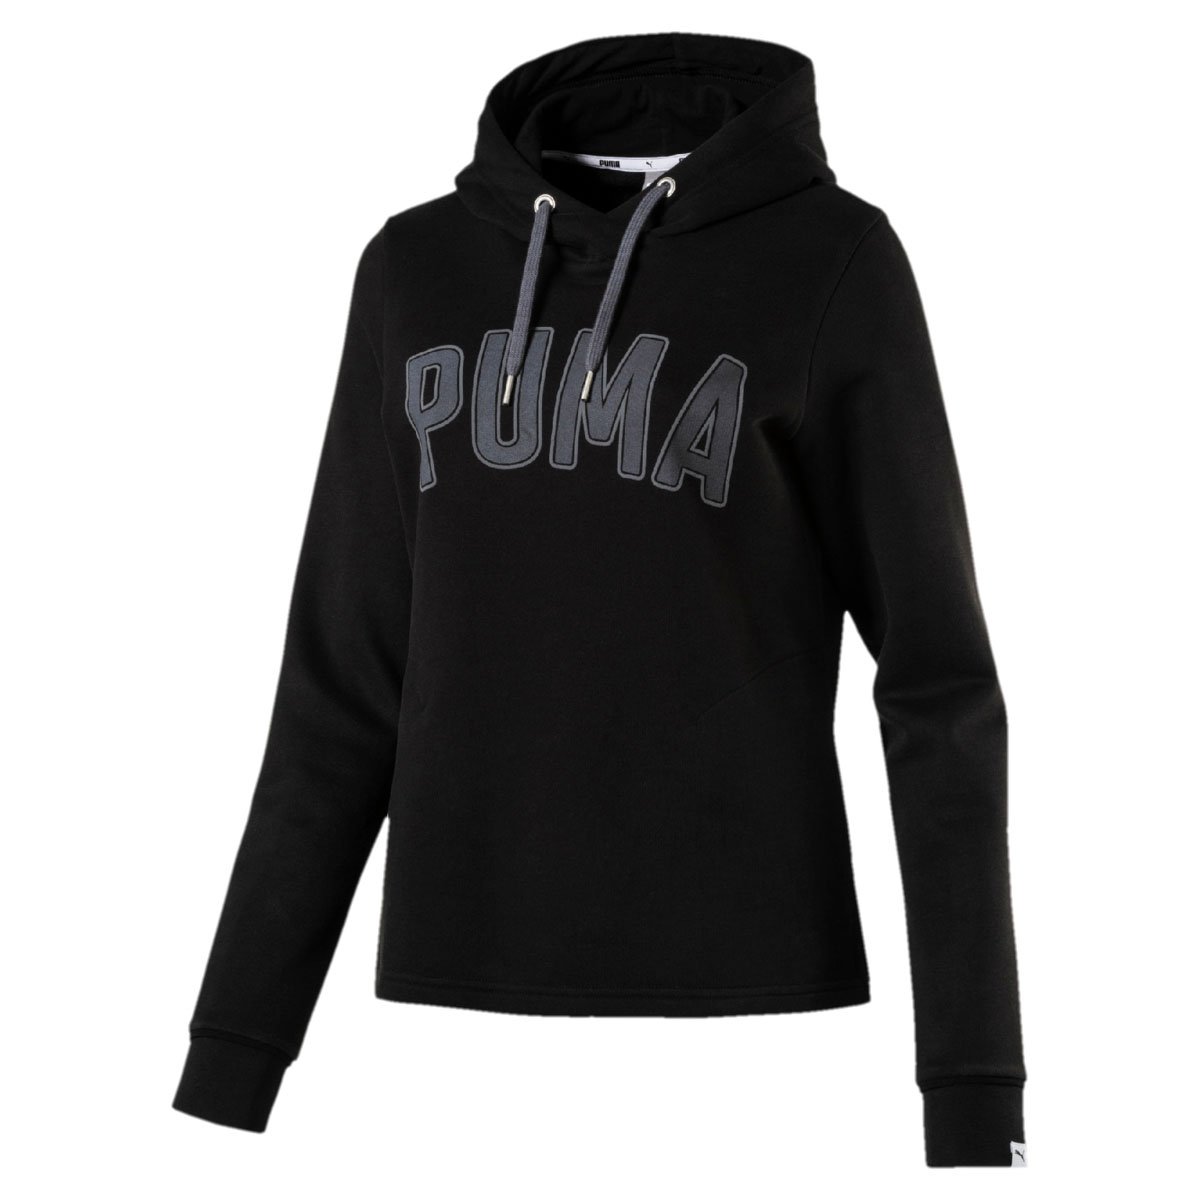 Sudadera Athletic Puma - Dama